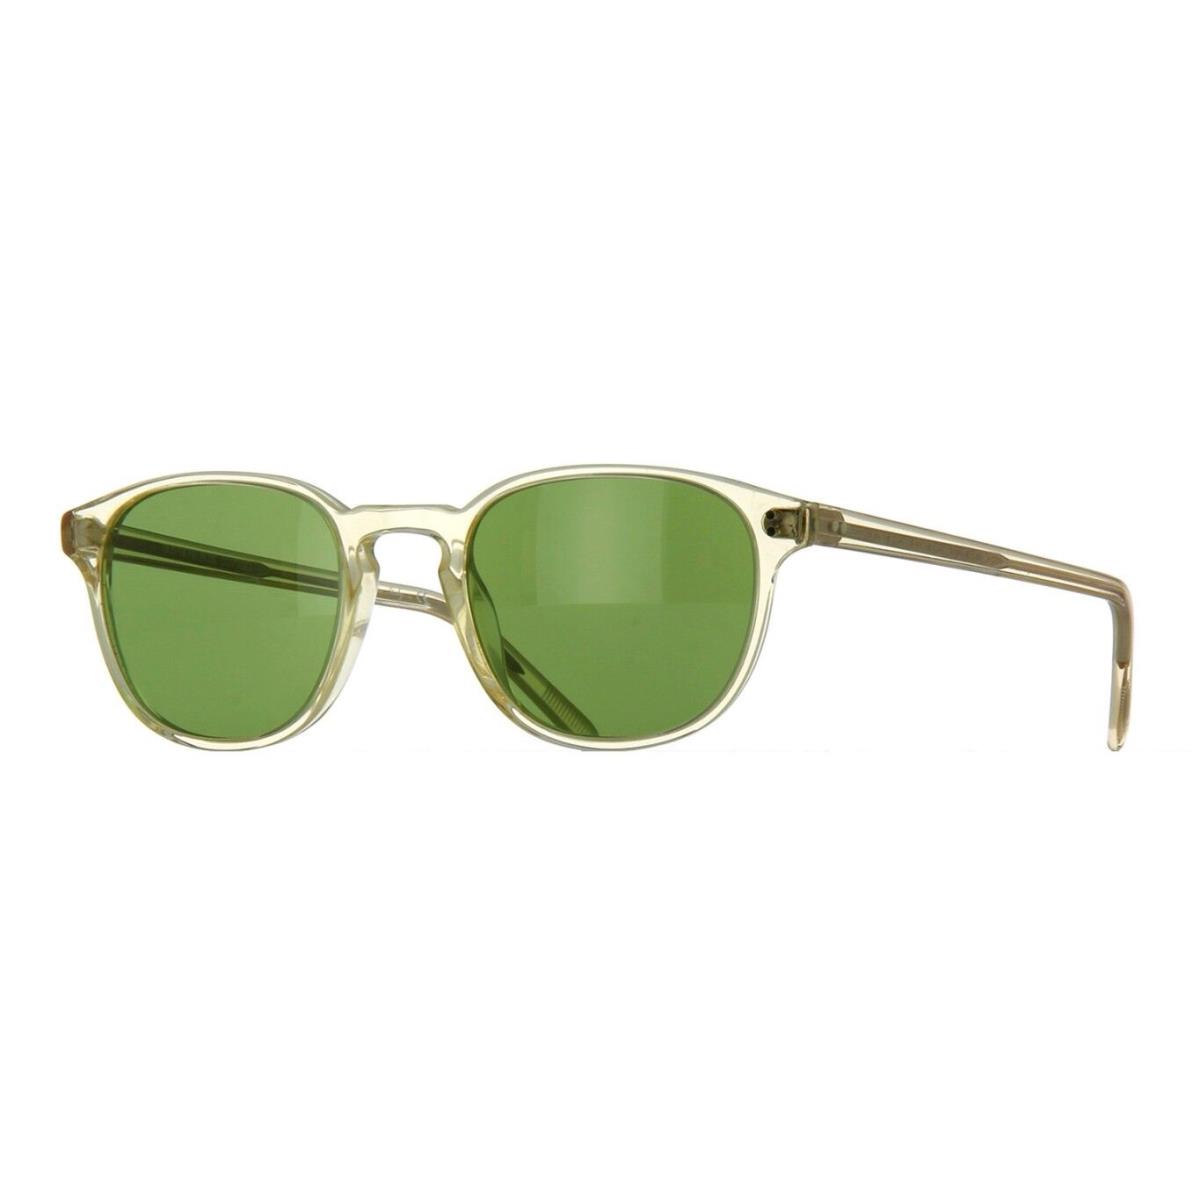 Oliver Peoples Fairmont OV 5219S Buff/green C 1094/52 Sunglasses - Frame: Beige, Lens: Green